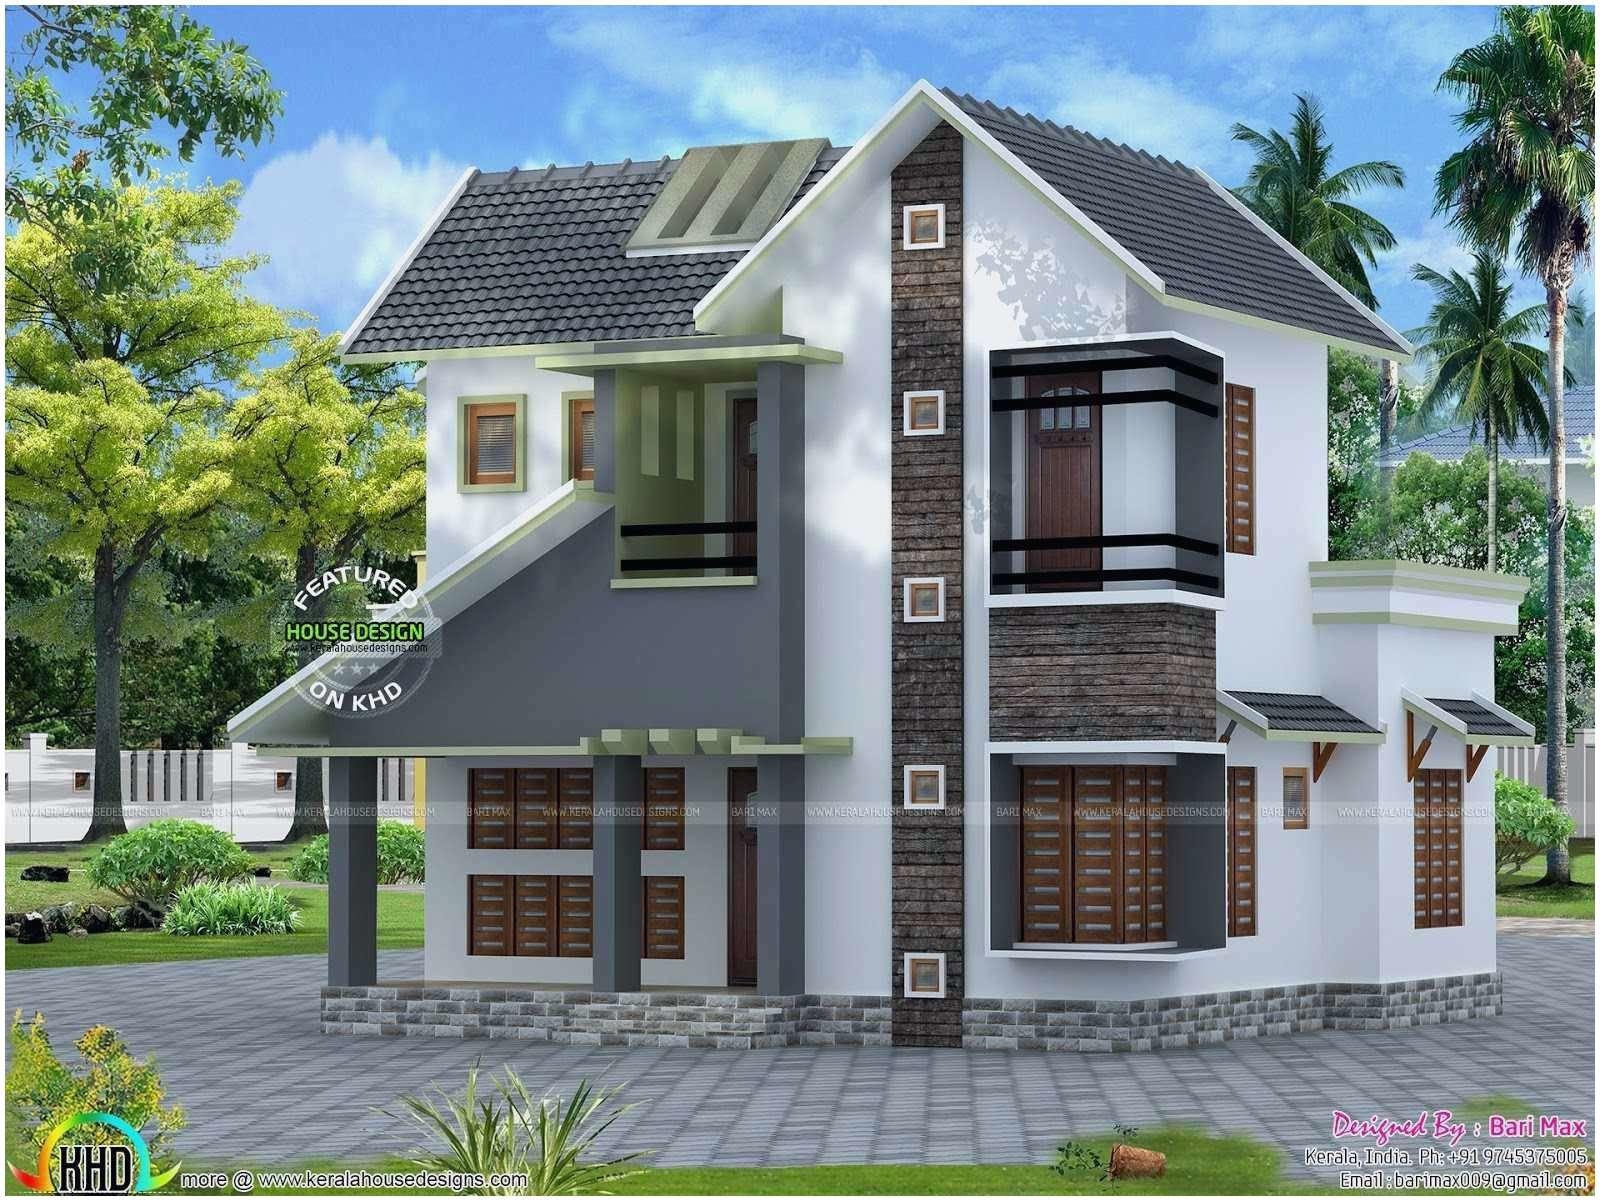 caribbean house plans popular house plans tropical island style beach home floor plans house plans image